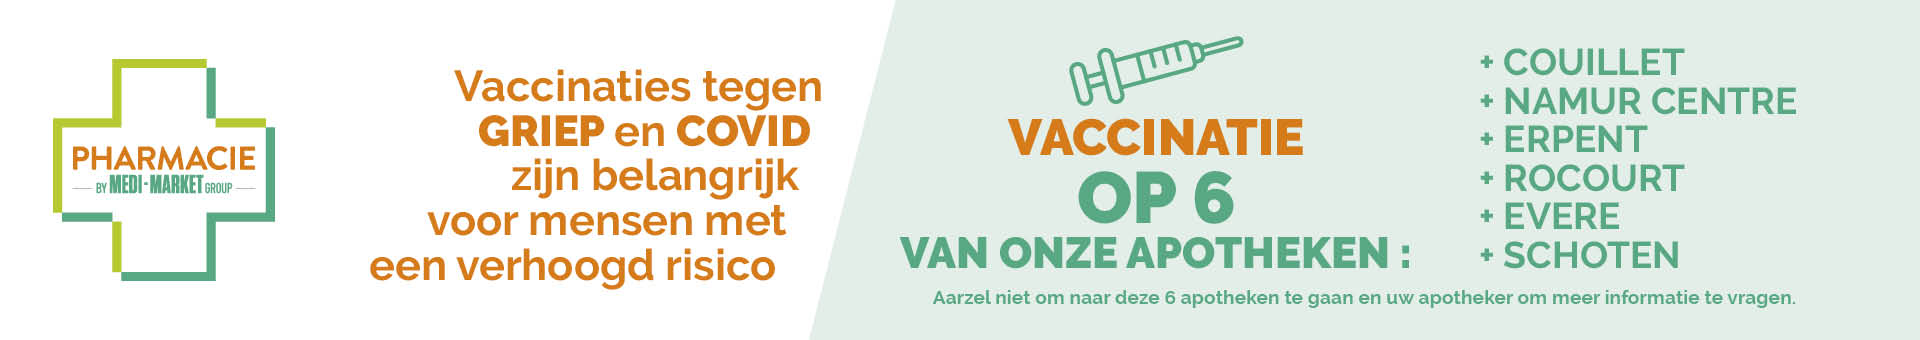 Bannière web_vaccin grippe_385x613_NL_V1.jpg